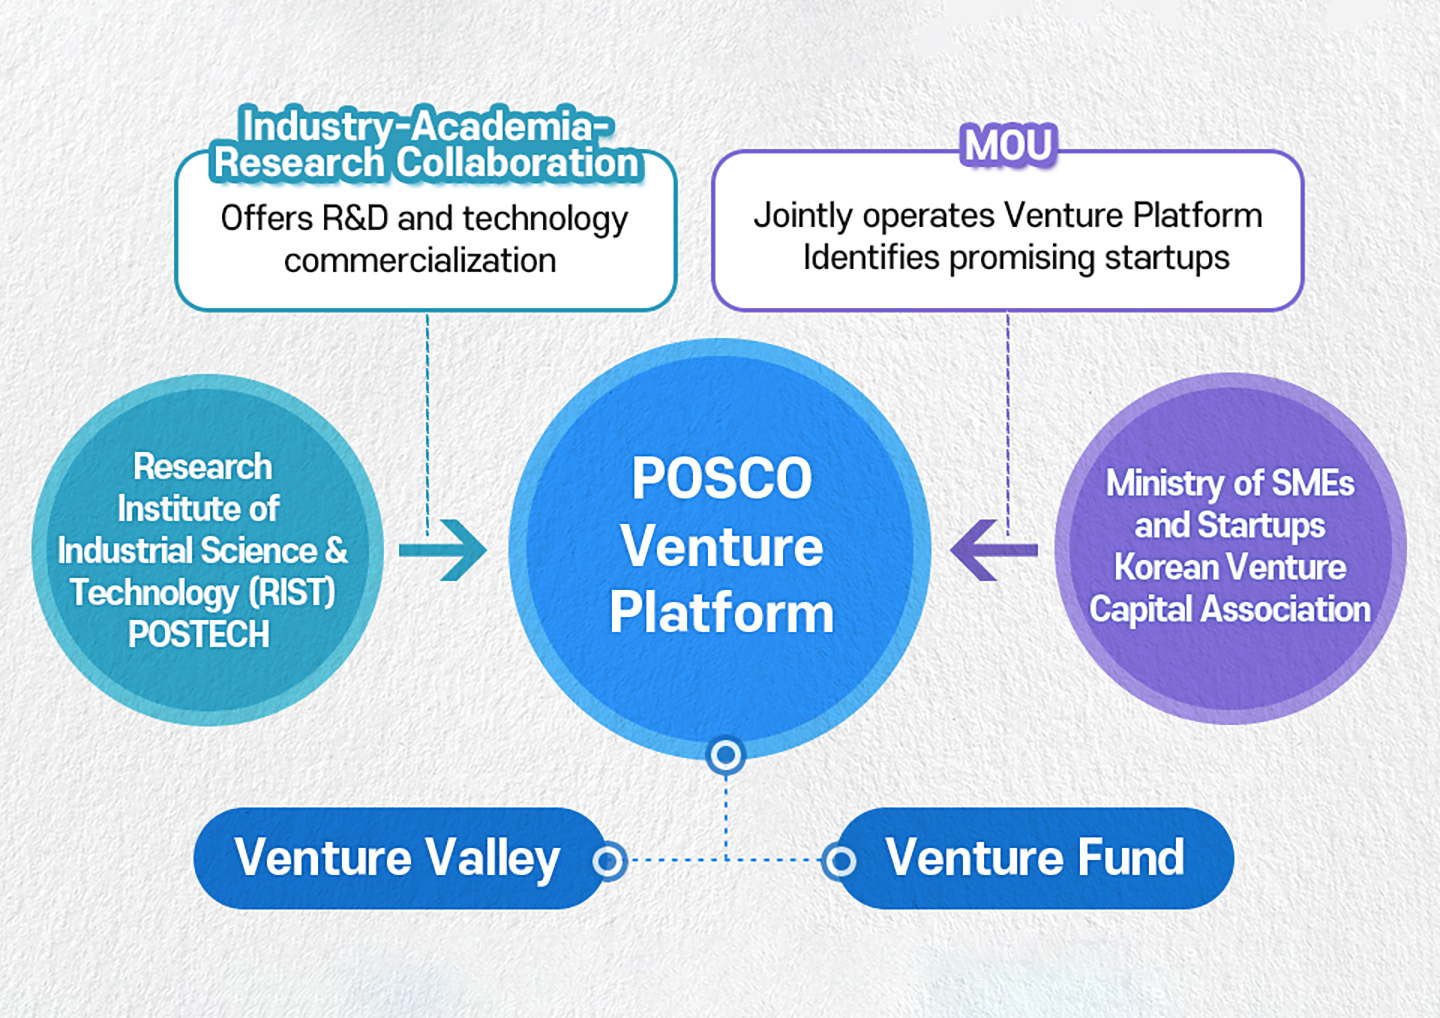 POSCO Venture Platform